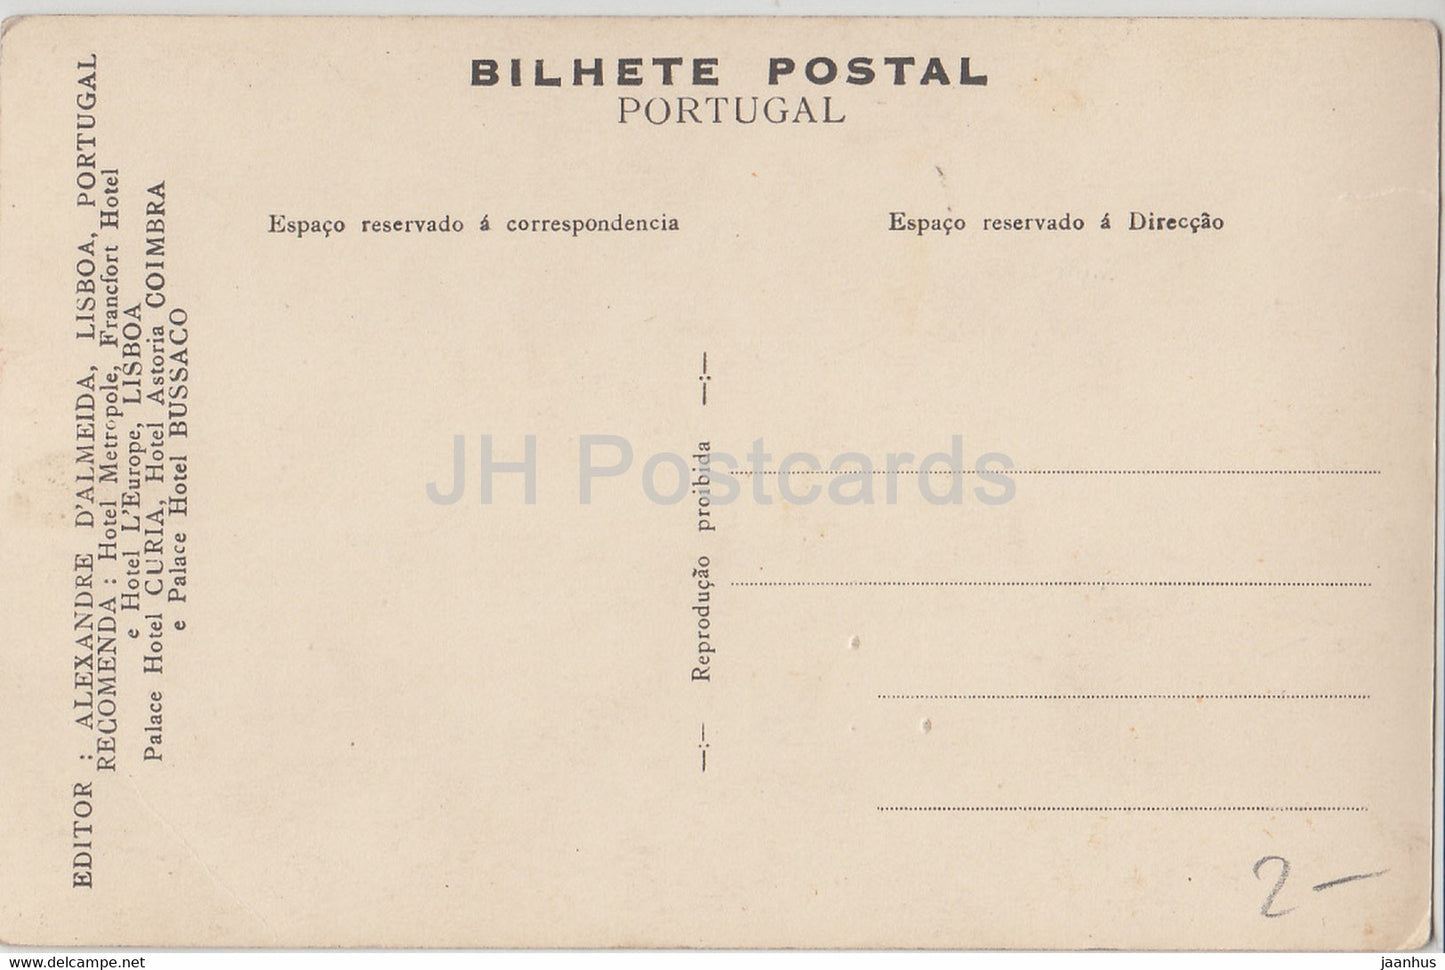 Bussaco - Uma Galeria do Palace Hotel - 32 - old postcard - Portugal - unused